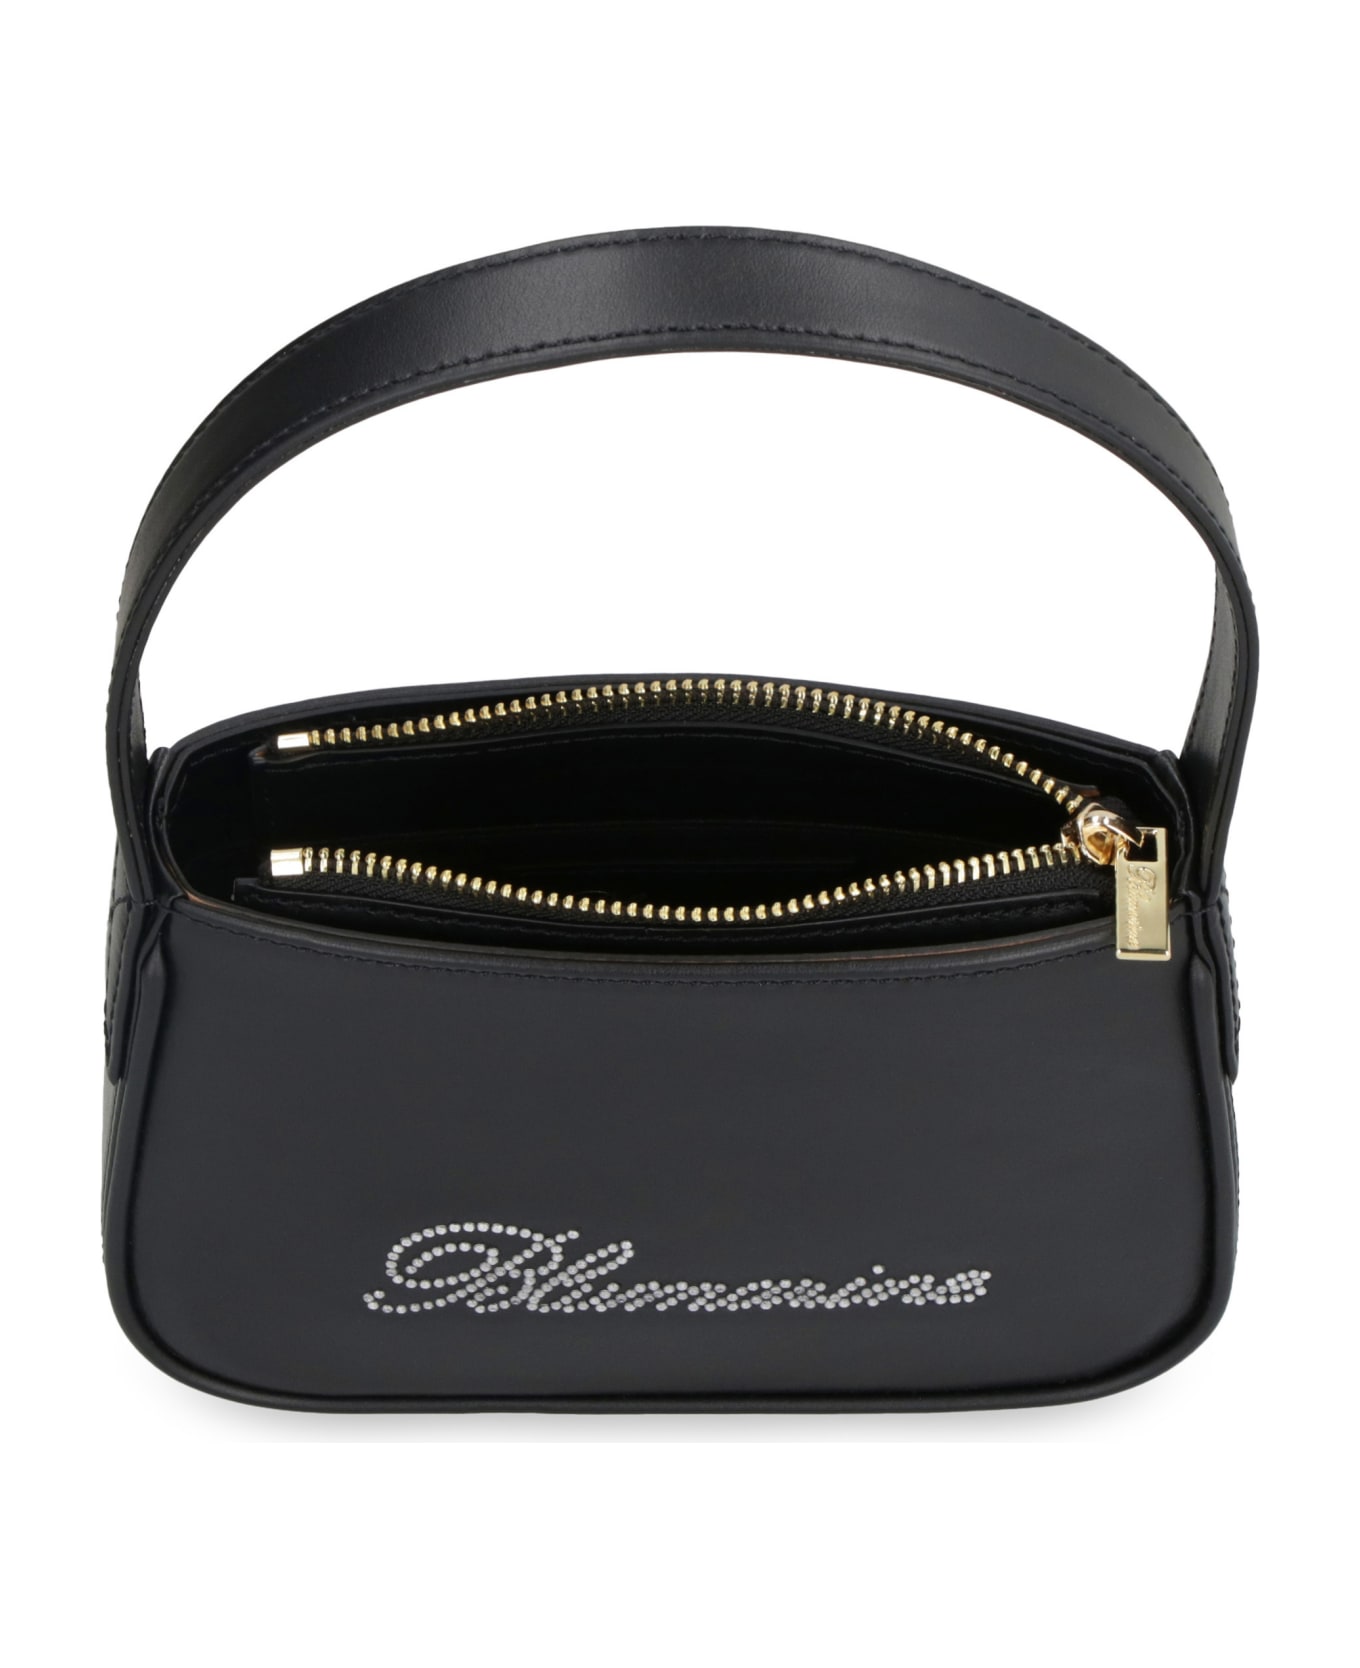 Blumarine Logo Print Leather Handbag - Nero